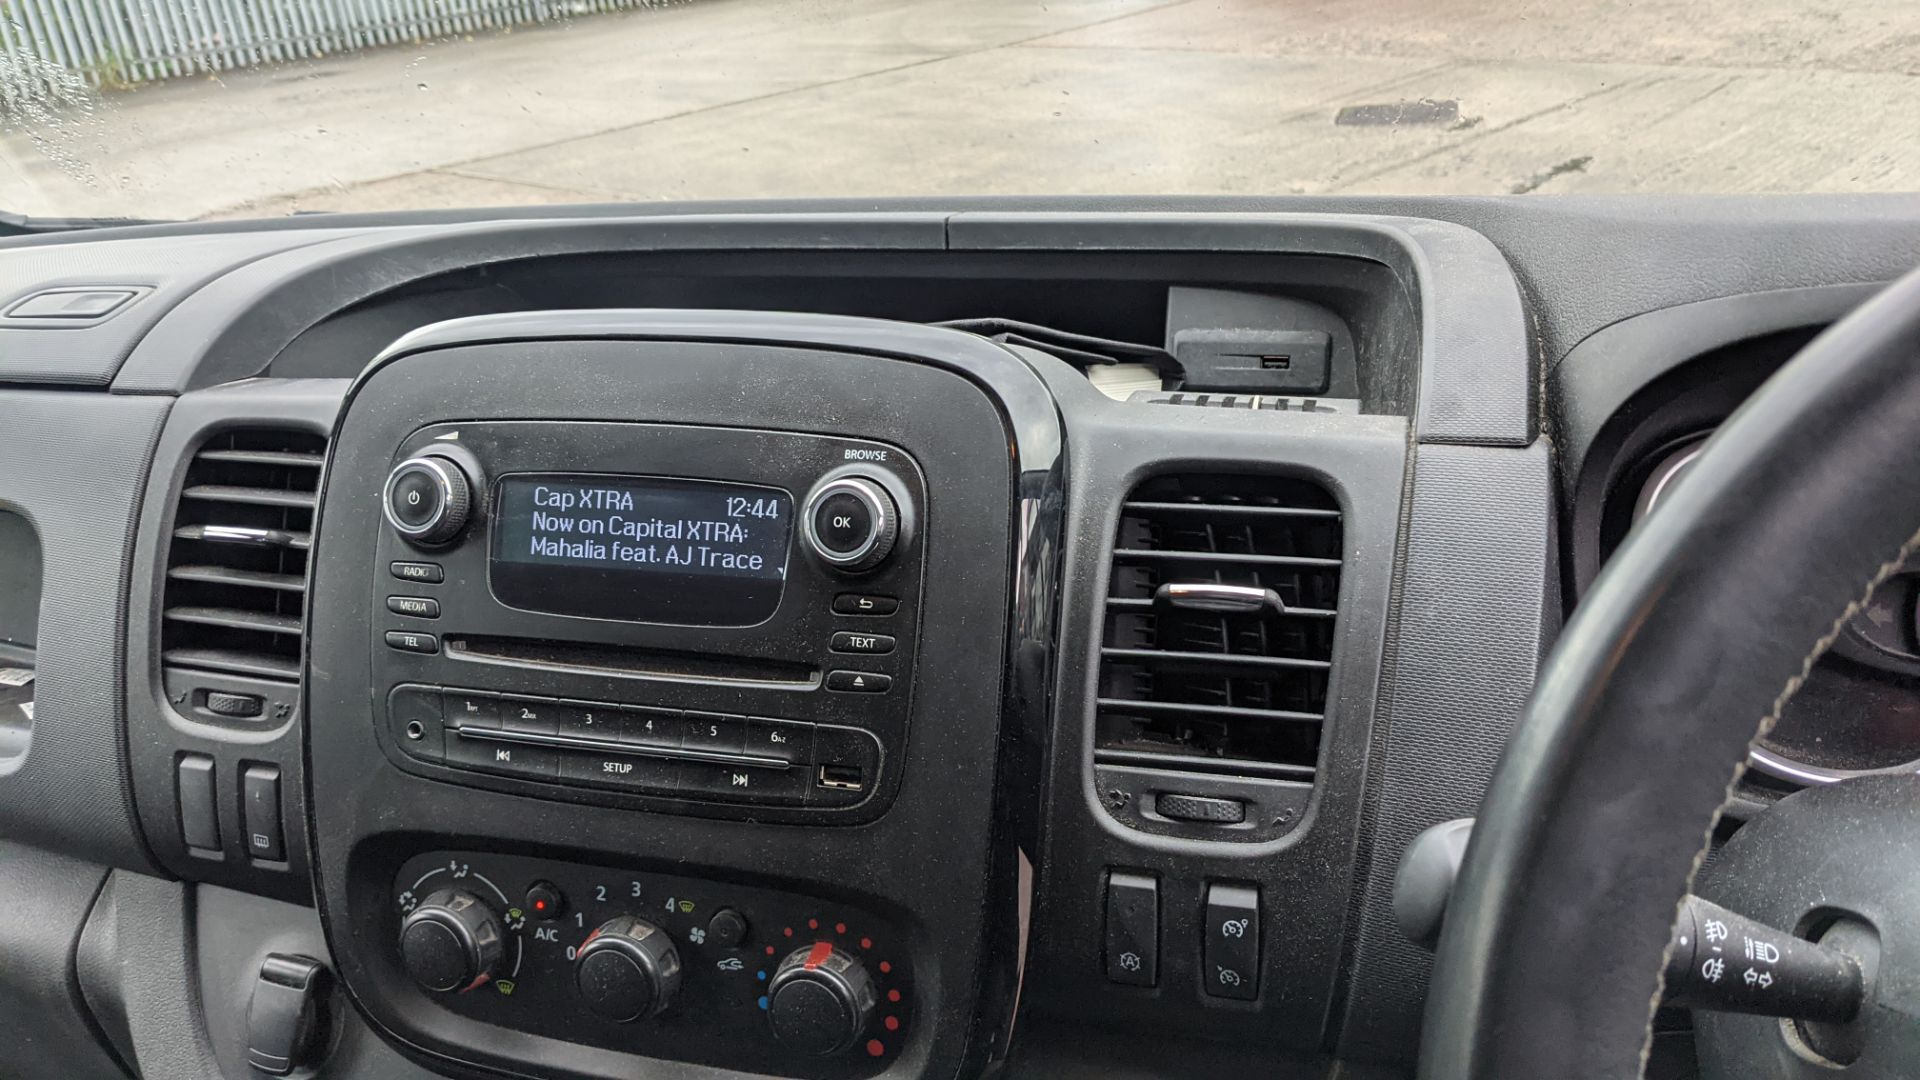 2019 Vauxhall Vivaro L2 2900 Sport CDTI BT SS panel van (Registration FD19 YUB) - Image 33 of 55